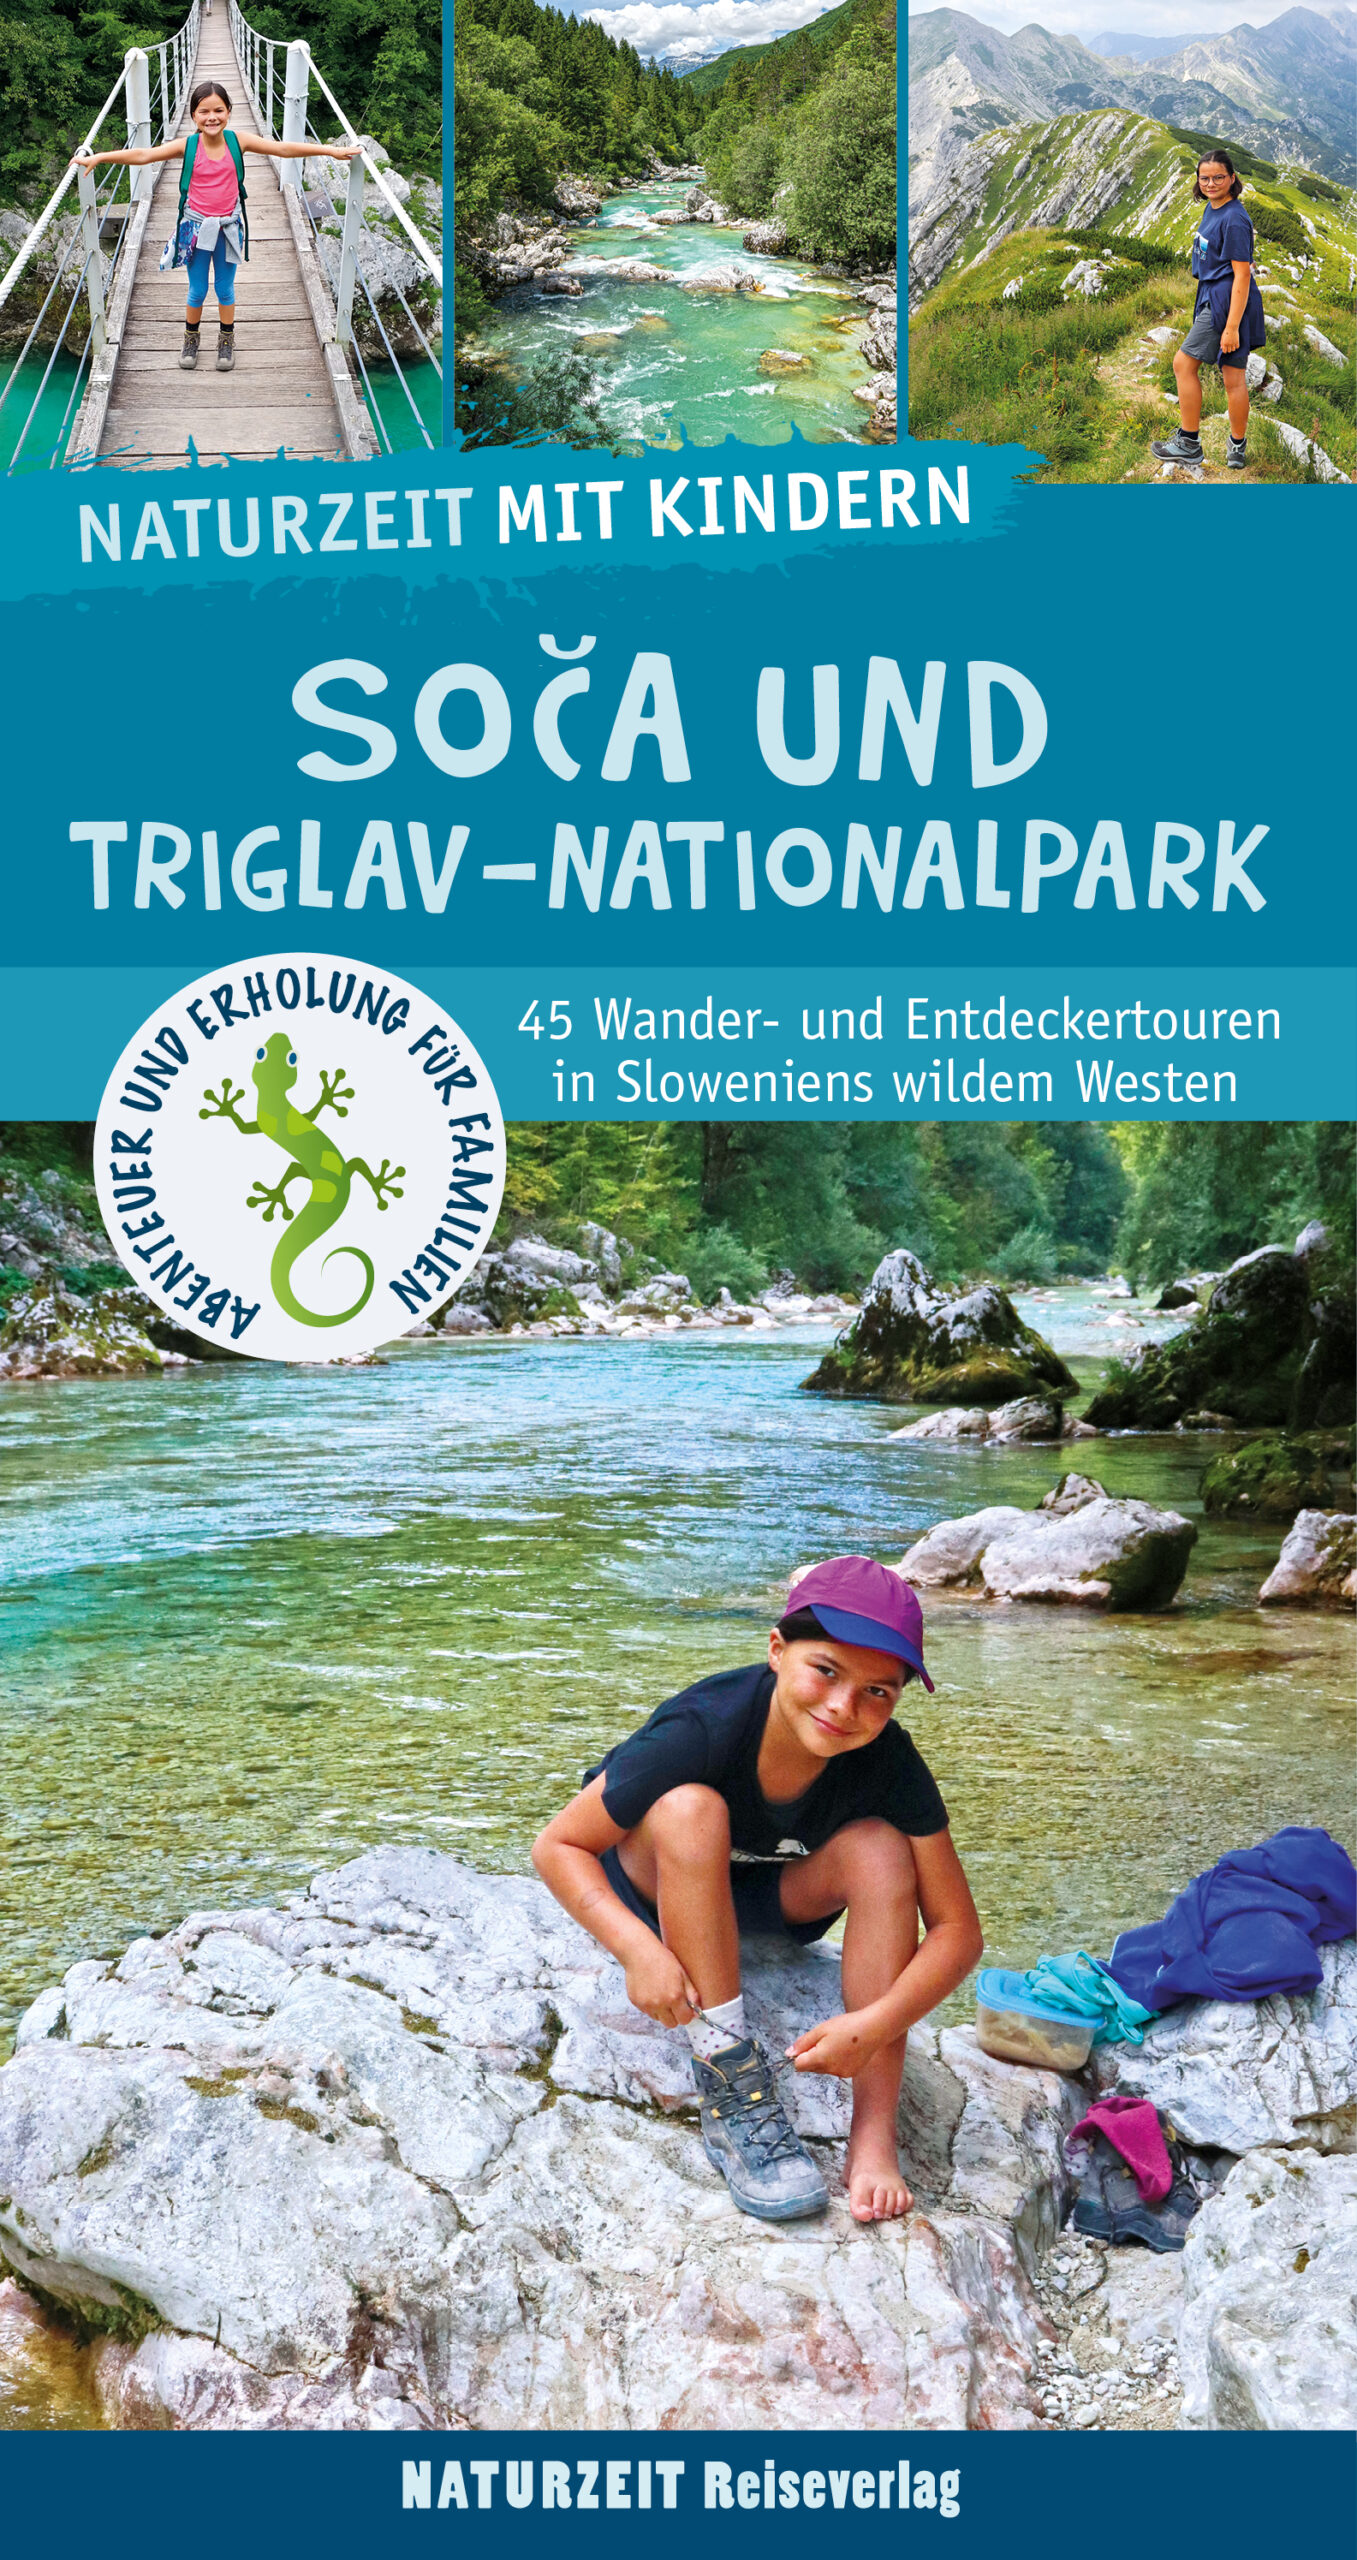 Soca und Triglav-Nationalpark